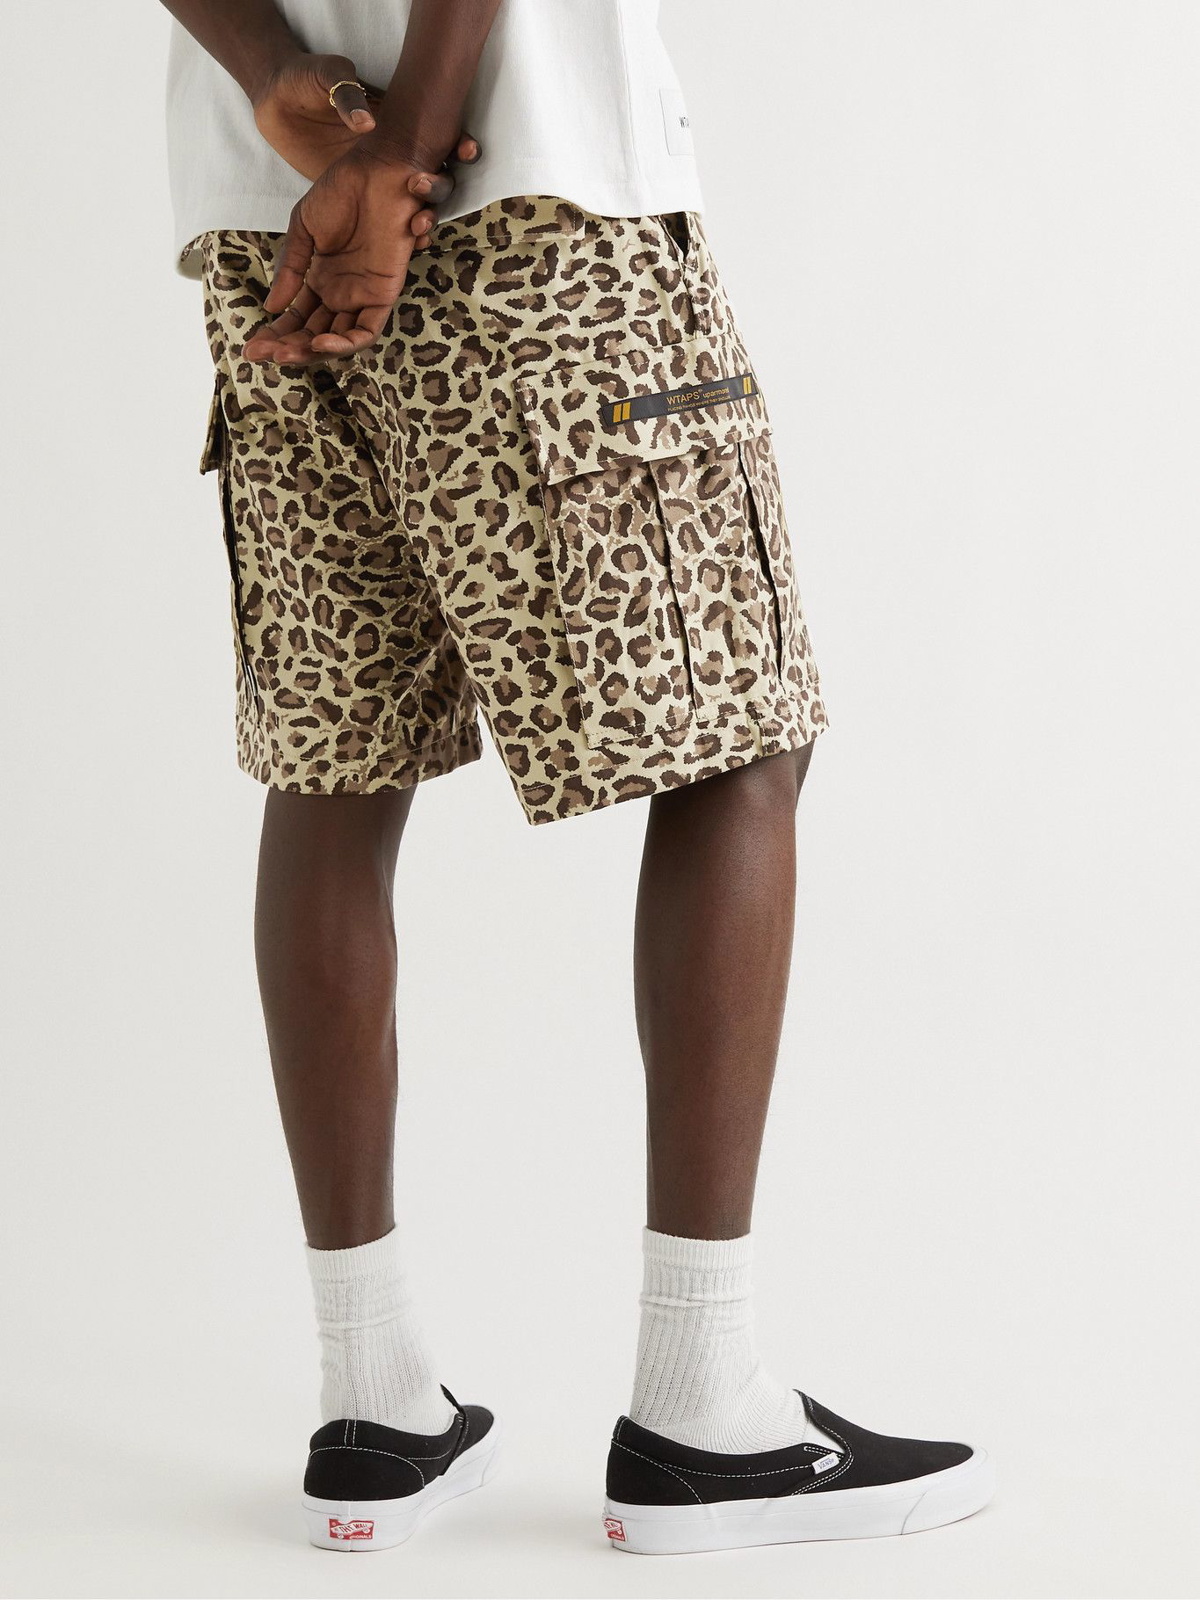 WTAPS - Jungle 01 Leopard-Print Cotton-Twill Cargo Shorts - Animal ...